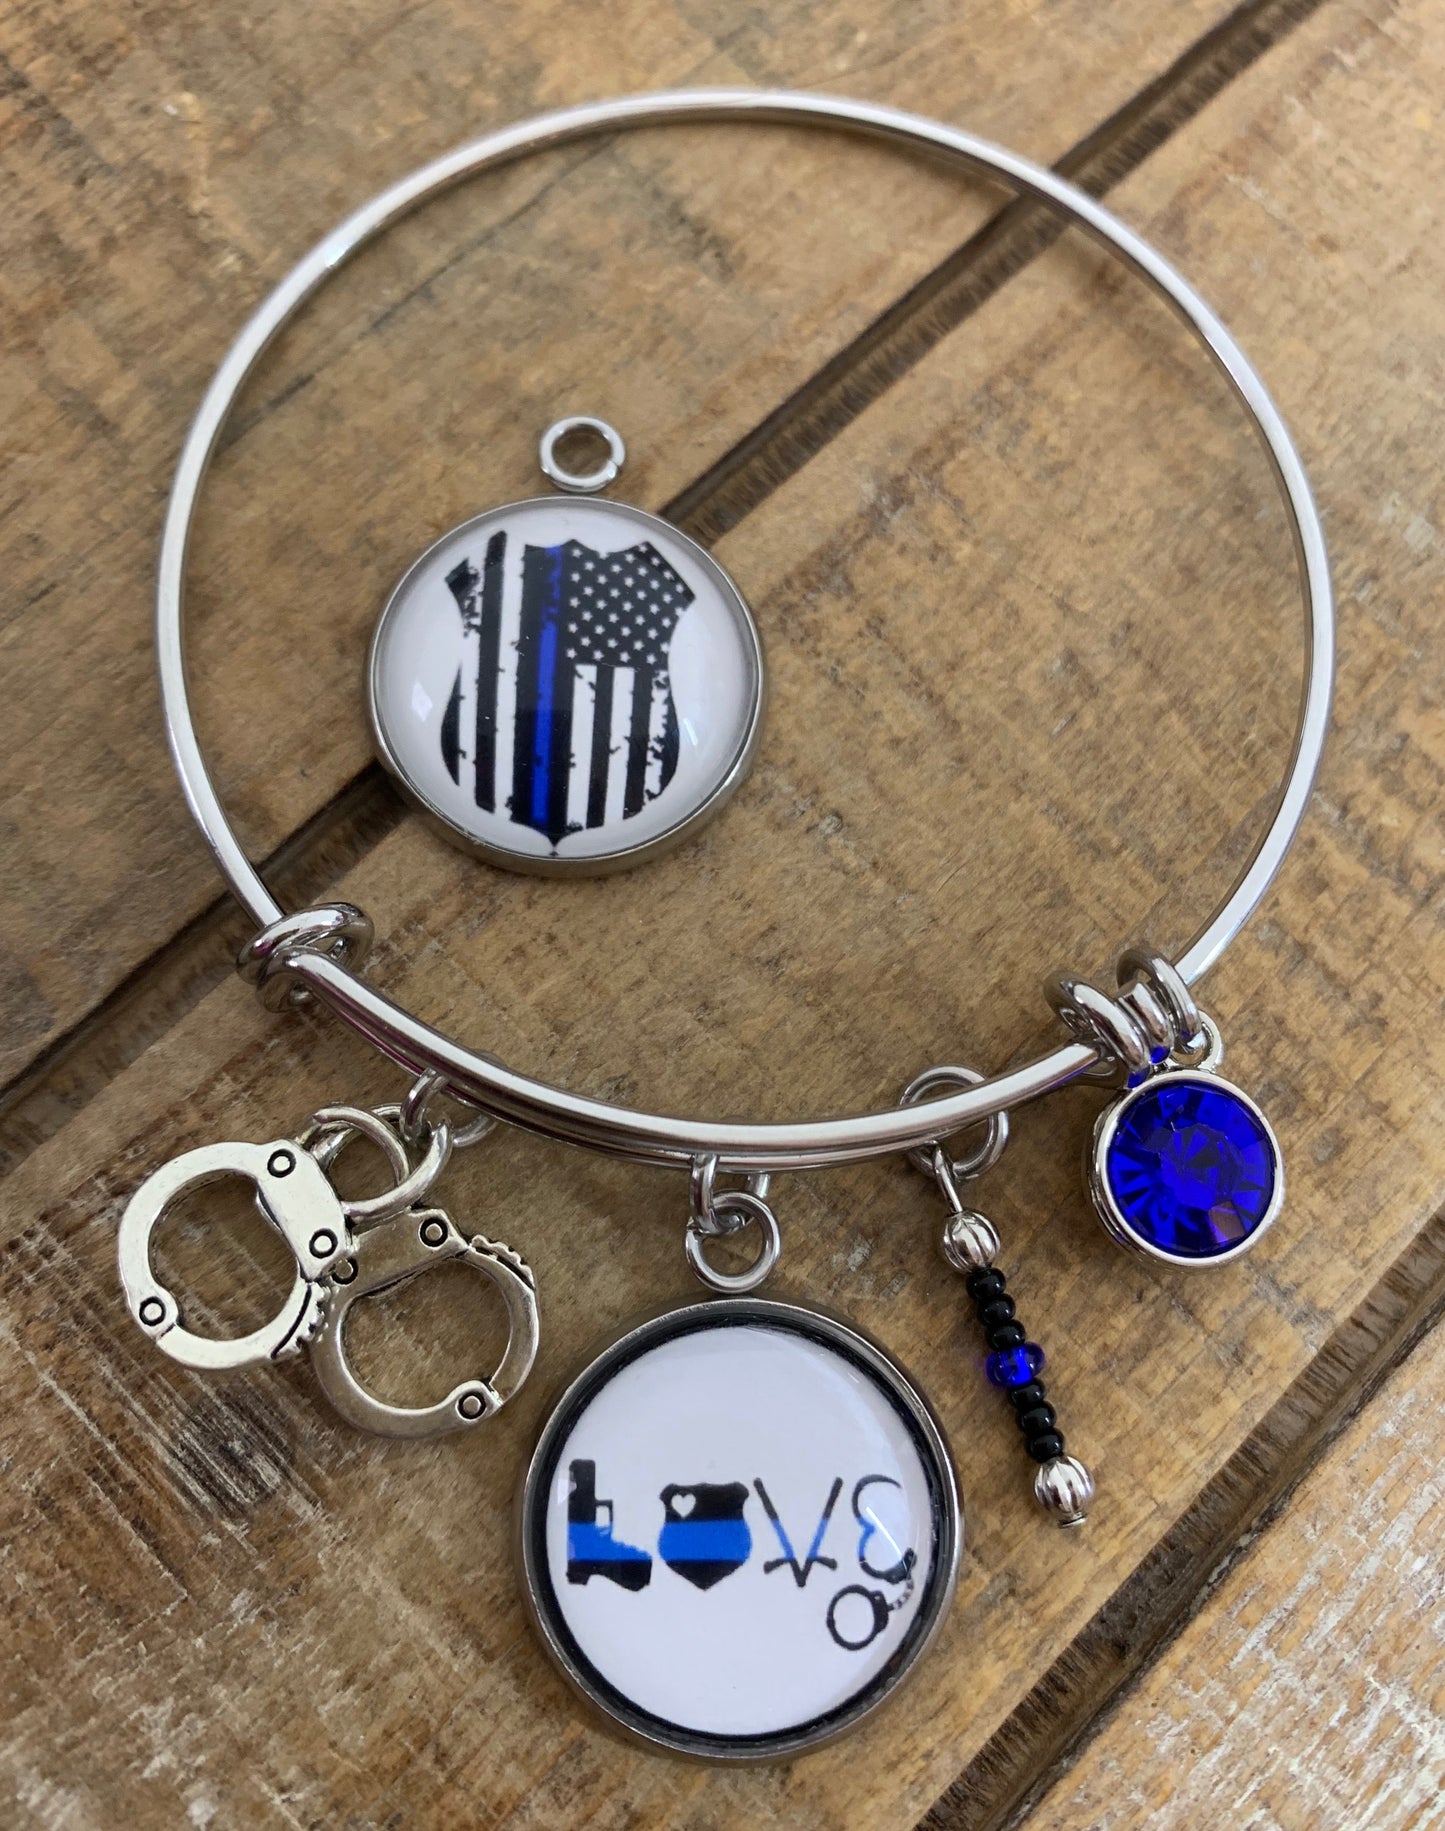 Thin Blue Line Bangle Bracelet- Several options for police, sheriff, trooper